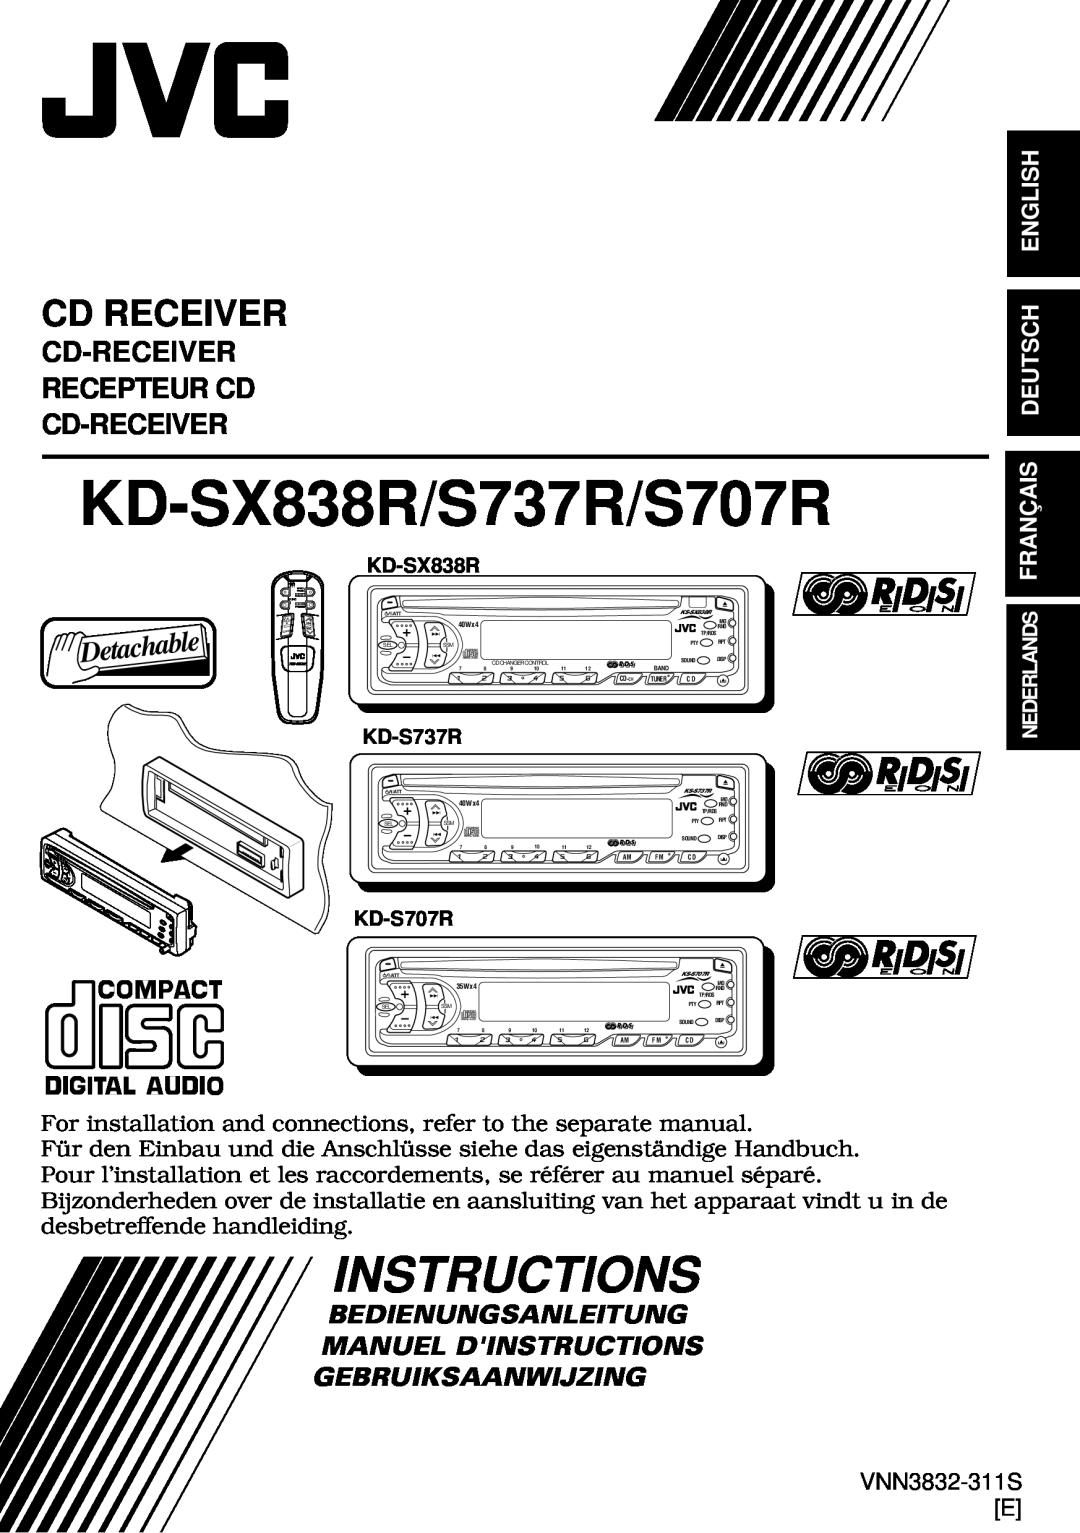 JVC manual Instructions, Cd-Receiver Recepteur Cd Cd-Receiver, KD-SX838R/S737R/S707R, Cd Receiver, Gebruiksaanwijzing 